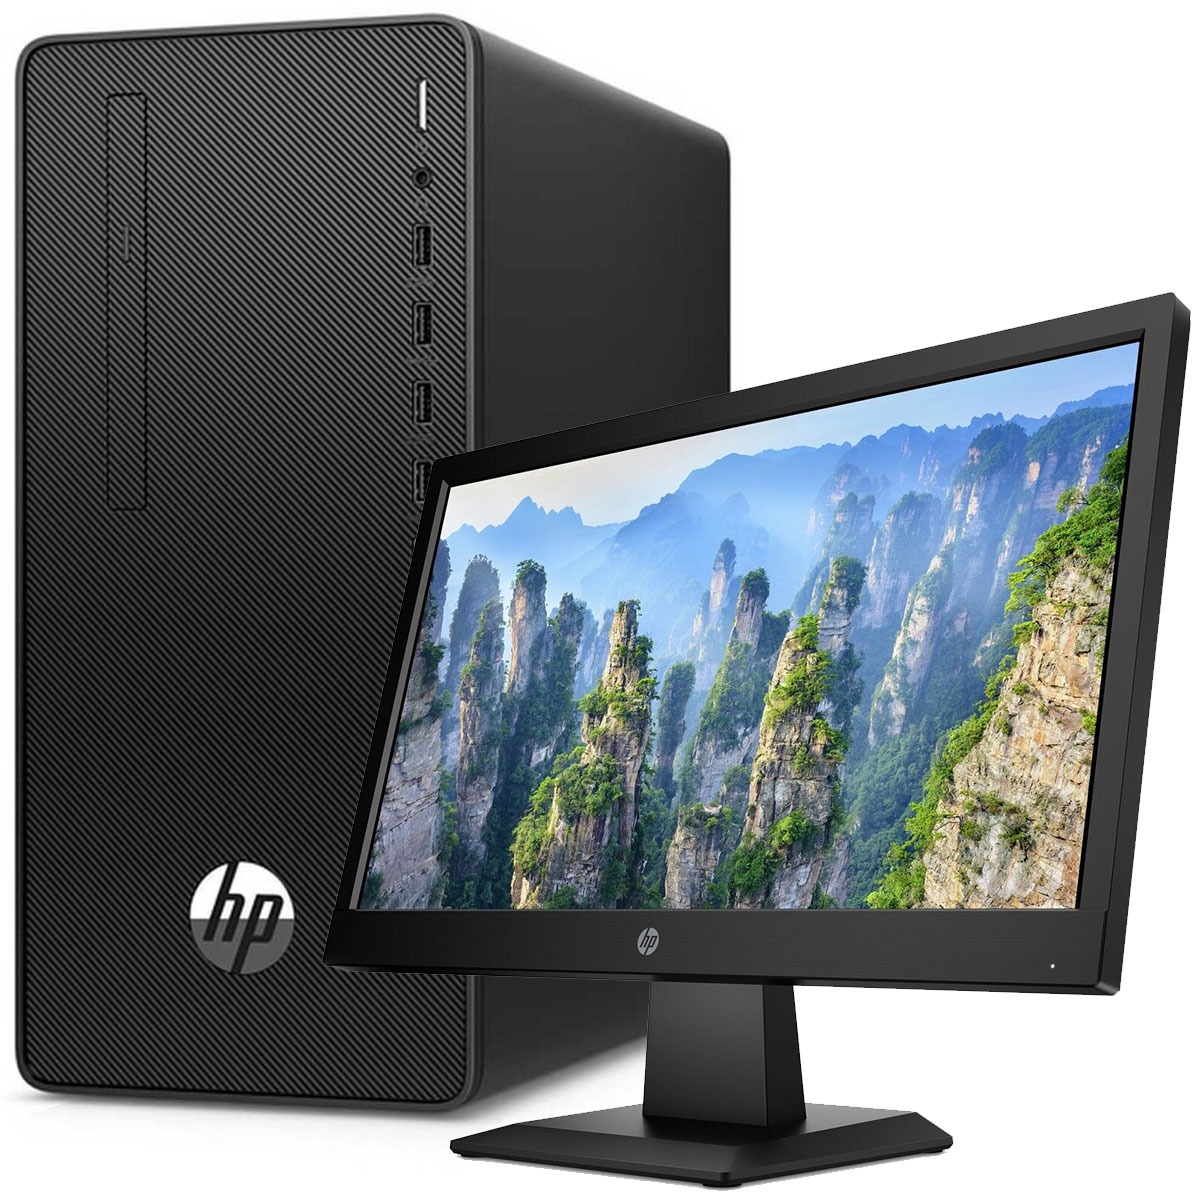 HP 290 G4 Intel® Core™ I3 4GB RAM 1TB SATA HDD 18.5″ Inches Display Monitor.